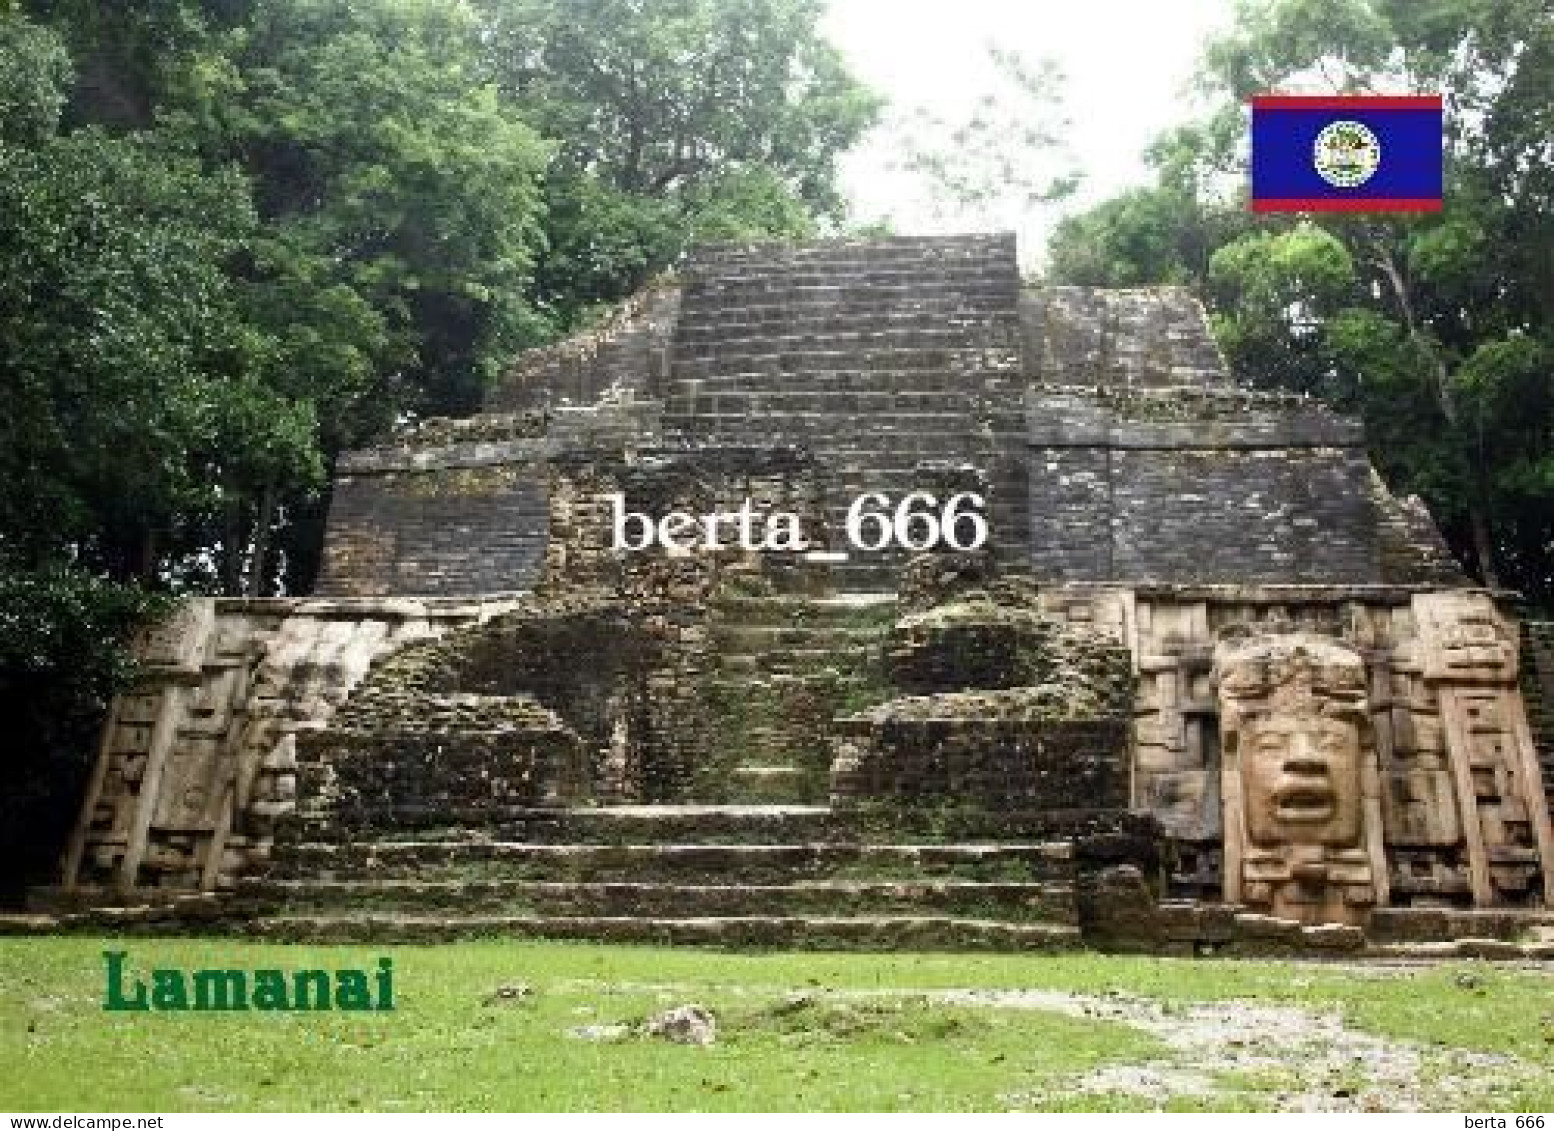 Belize Lamanai Temple Ruins New Postcard - Belice